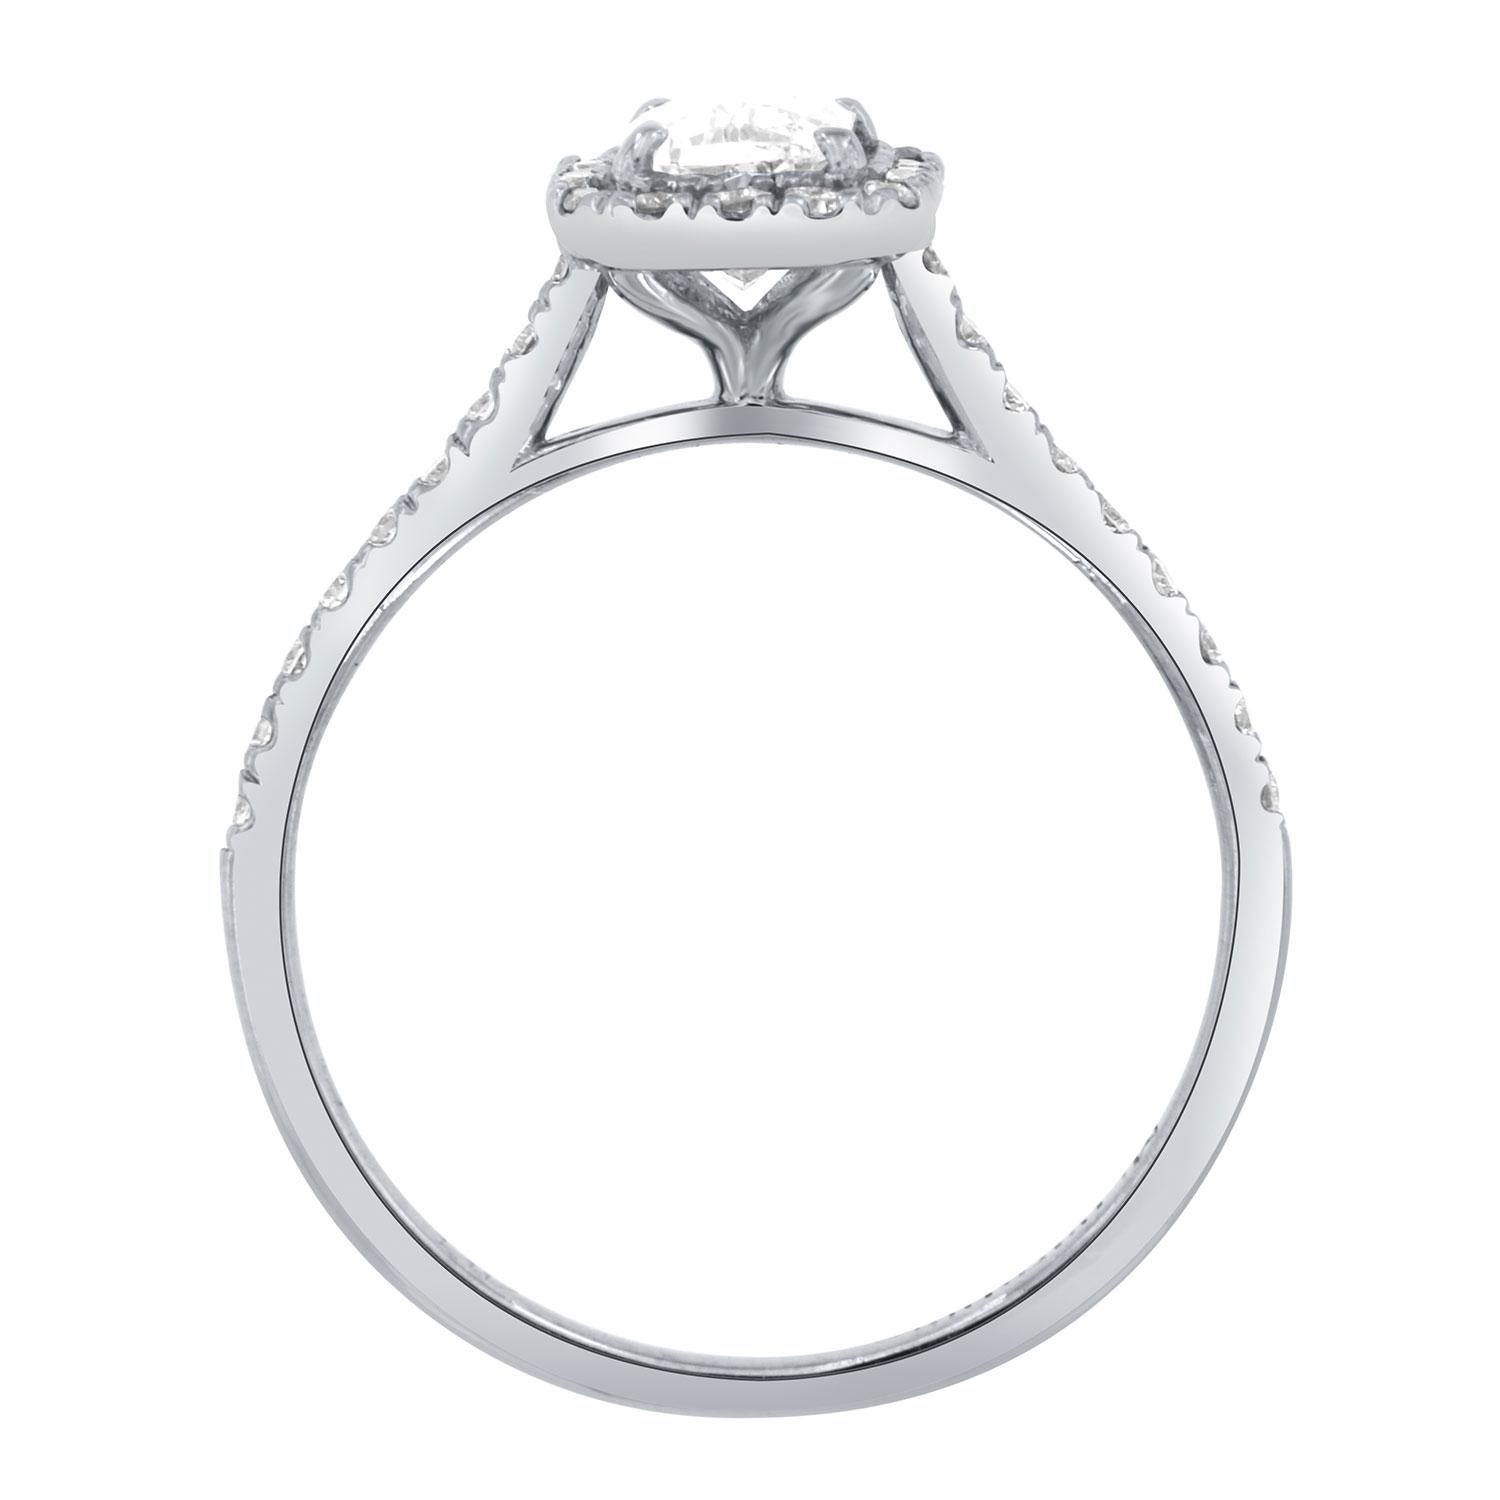 elongated radiant cut diamond ring with halo